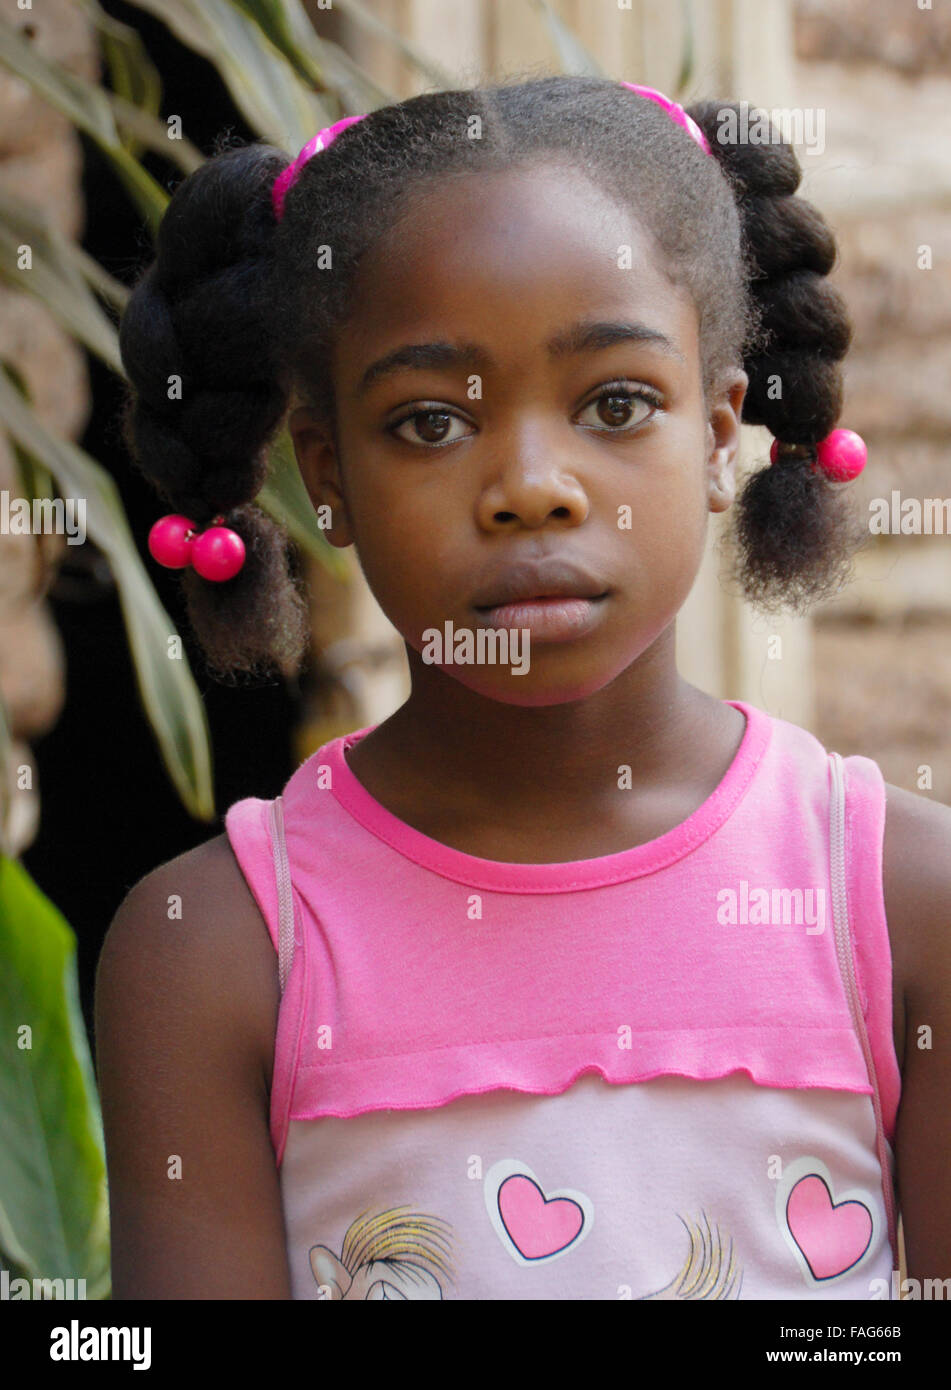 https://c8.alamy.com/comp/FAG66B/beautiful-little-black-girl-in-pinar-del-rio-cuba-FAG66B.jpg